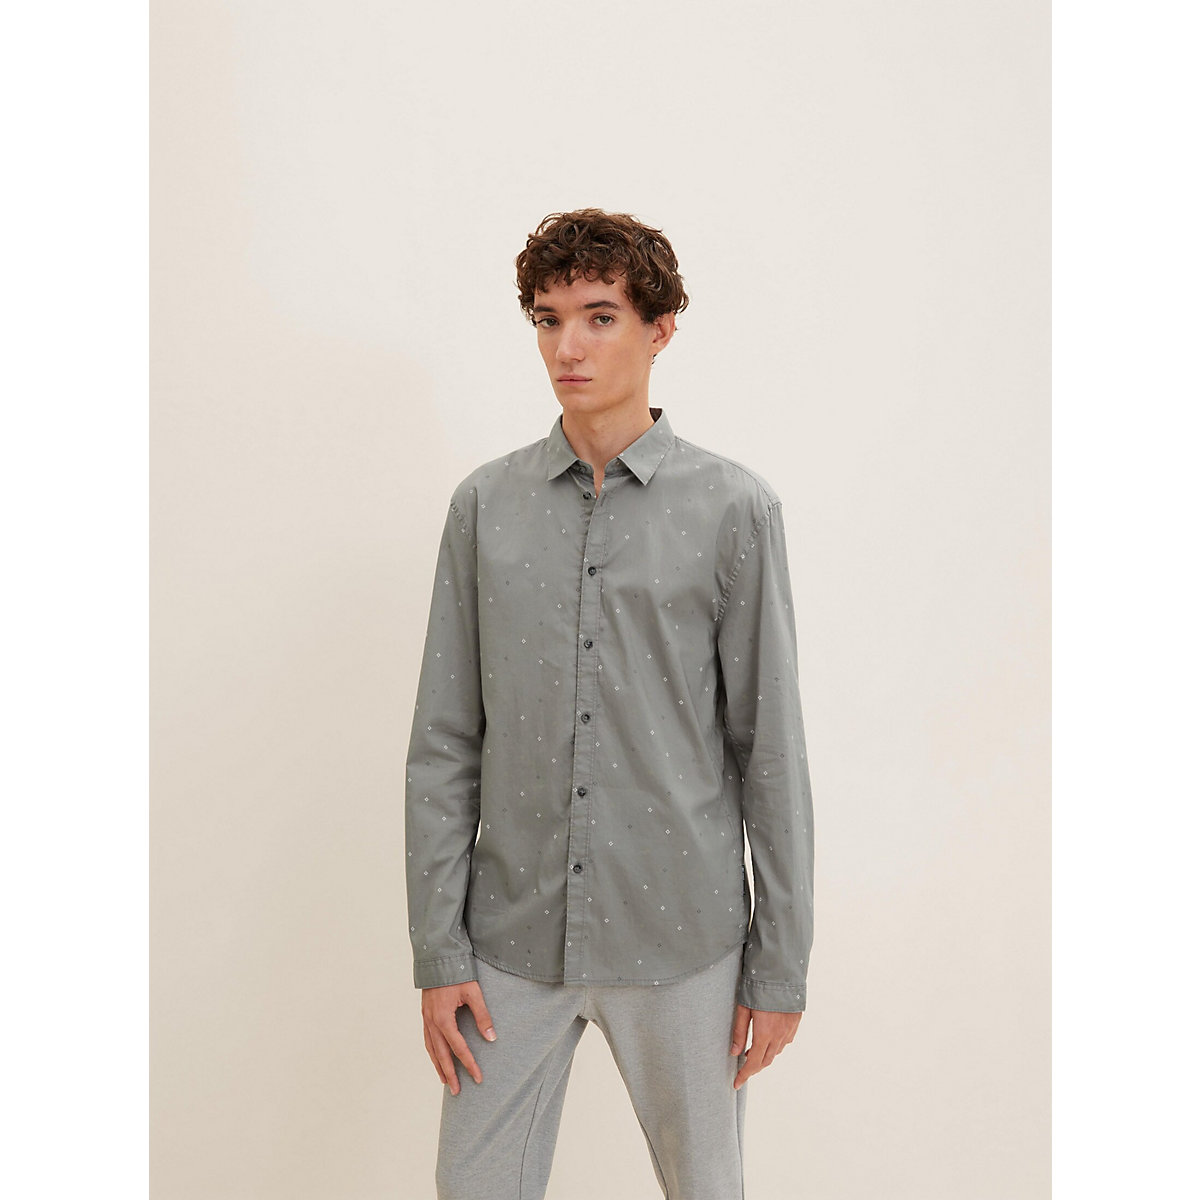 TOM TAILOR Denim Blusen & Shirts Slim Fit Hemd mit Printmuster Langarmhemden grau